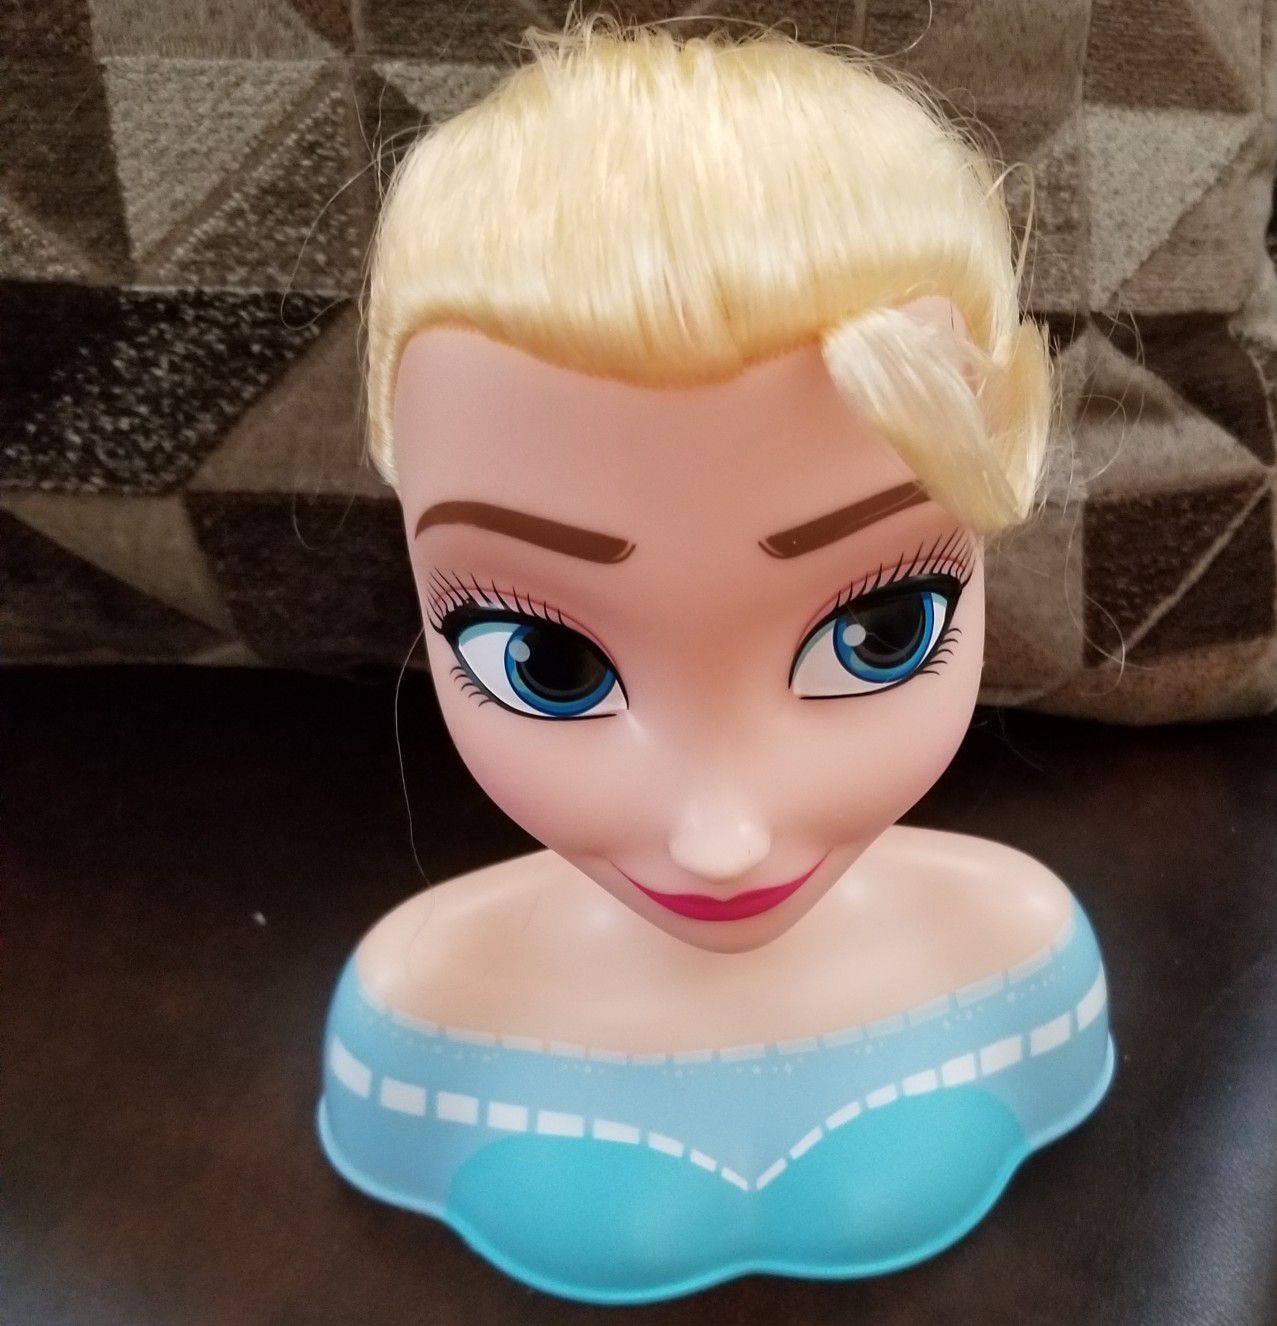 Brand new Elsa doll head